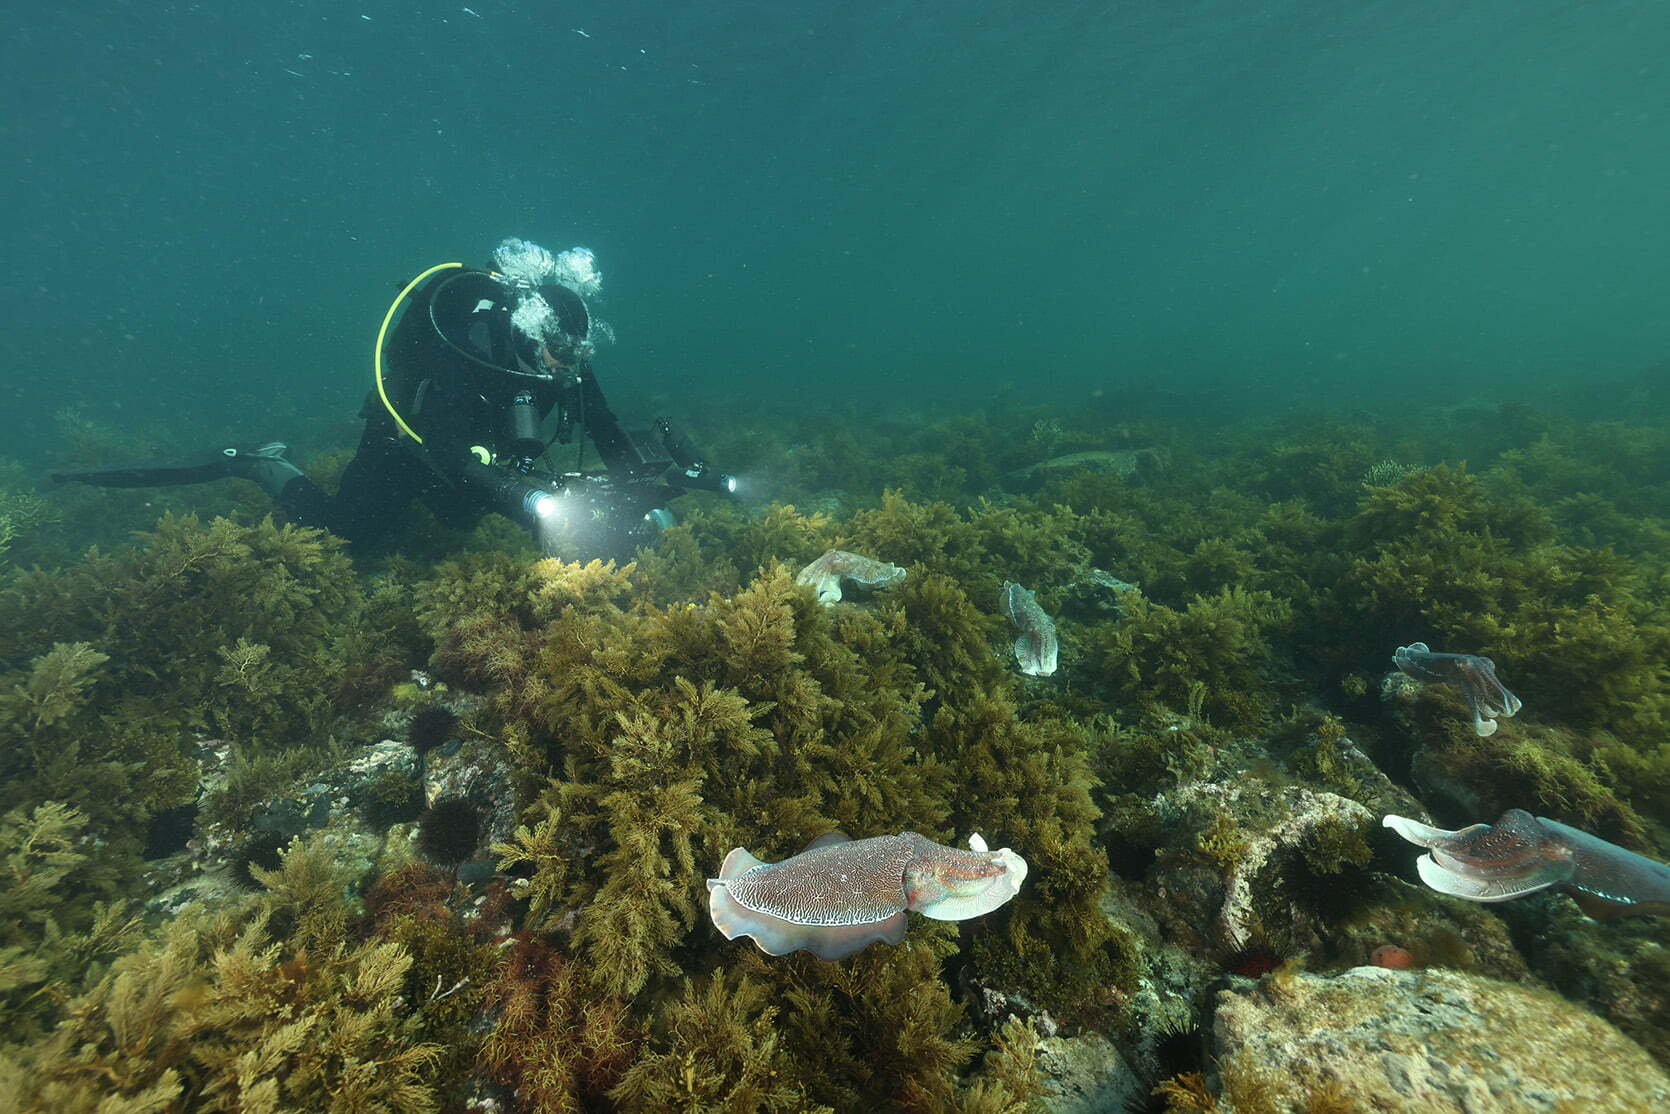 Underwater cameraman, Jon Shaw filming giant cuttlefish.